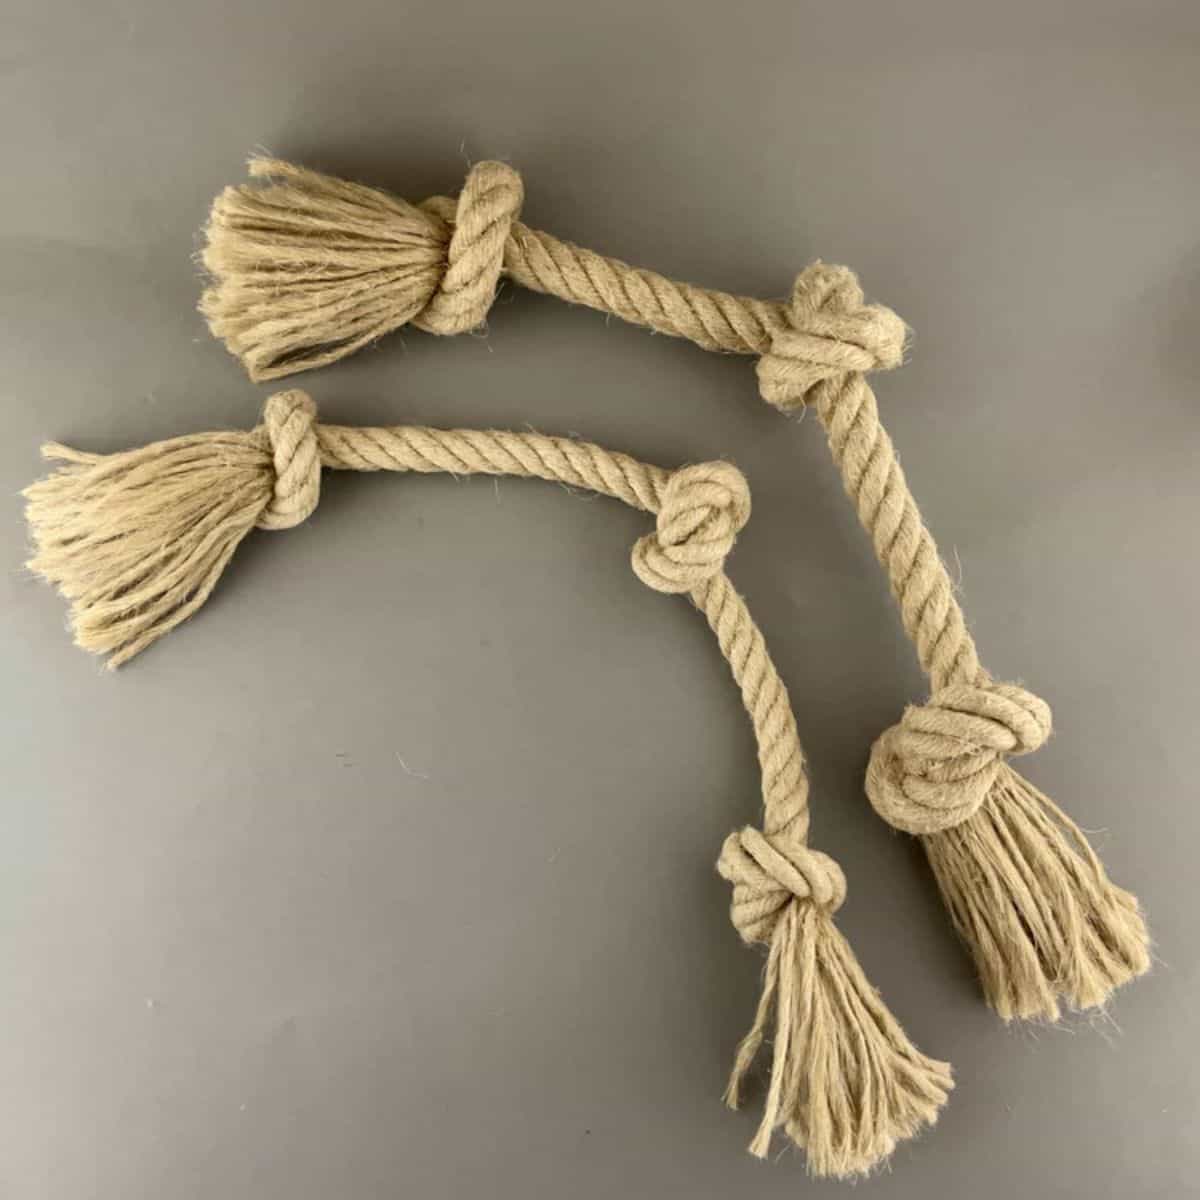 3 knot hemp rope